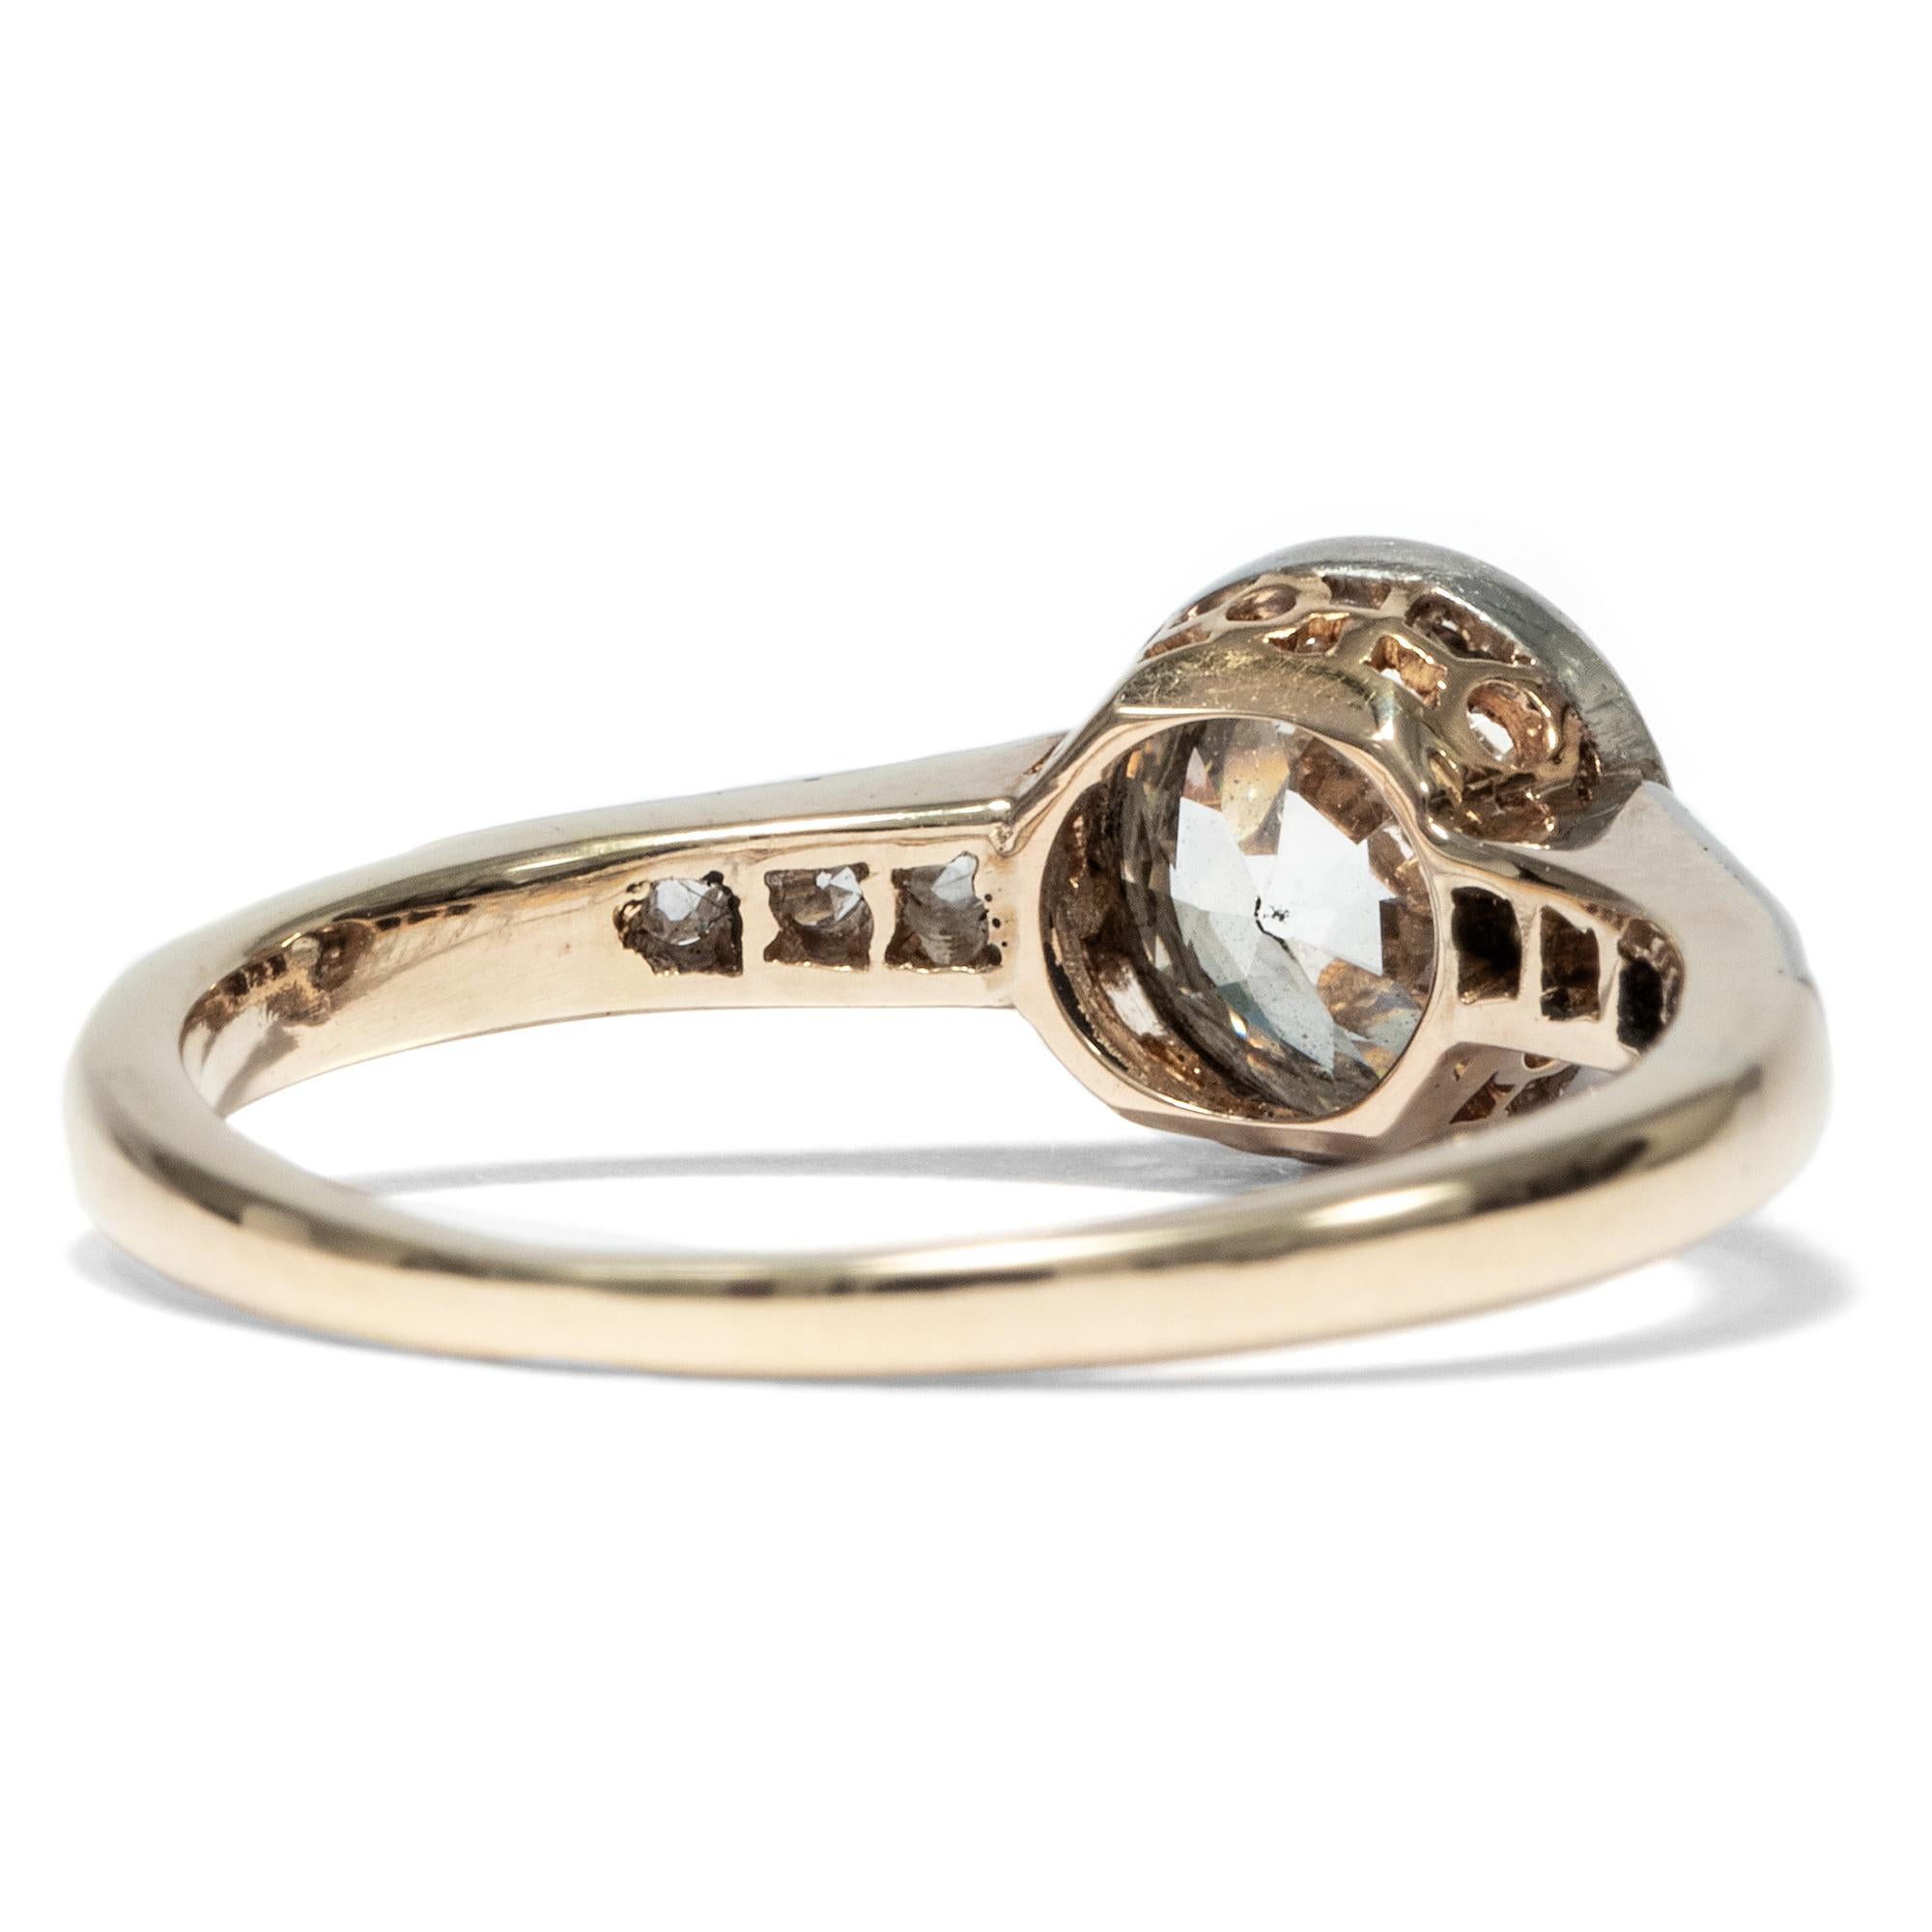 Women's or Men's Antique Certified 1.50 Carat Old European Cut Diamond Solitaire Engagement Ring